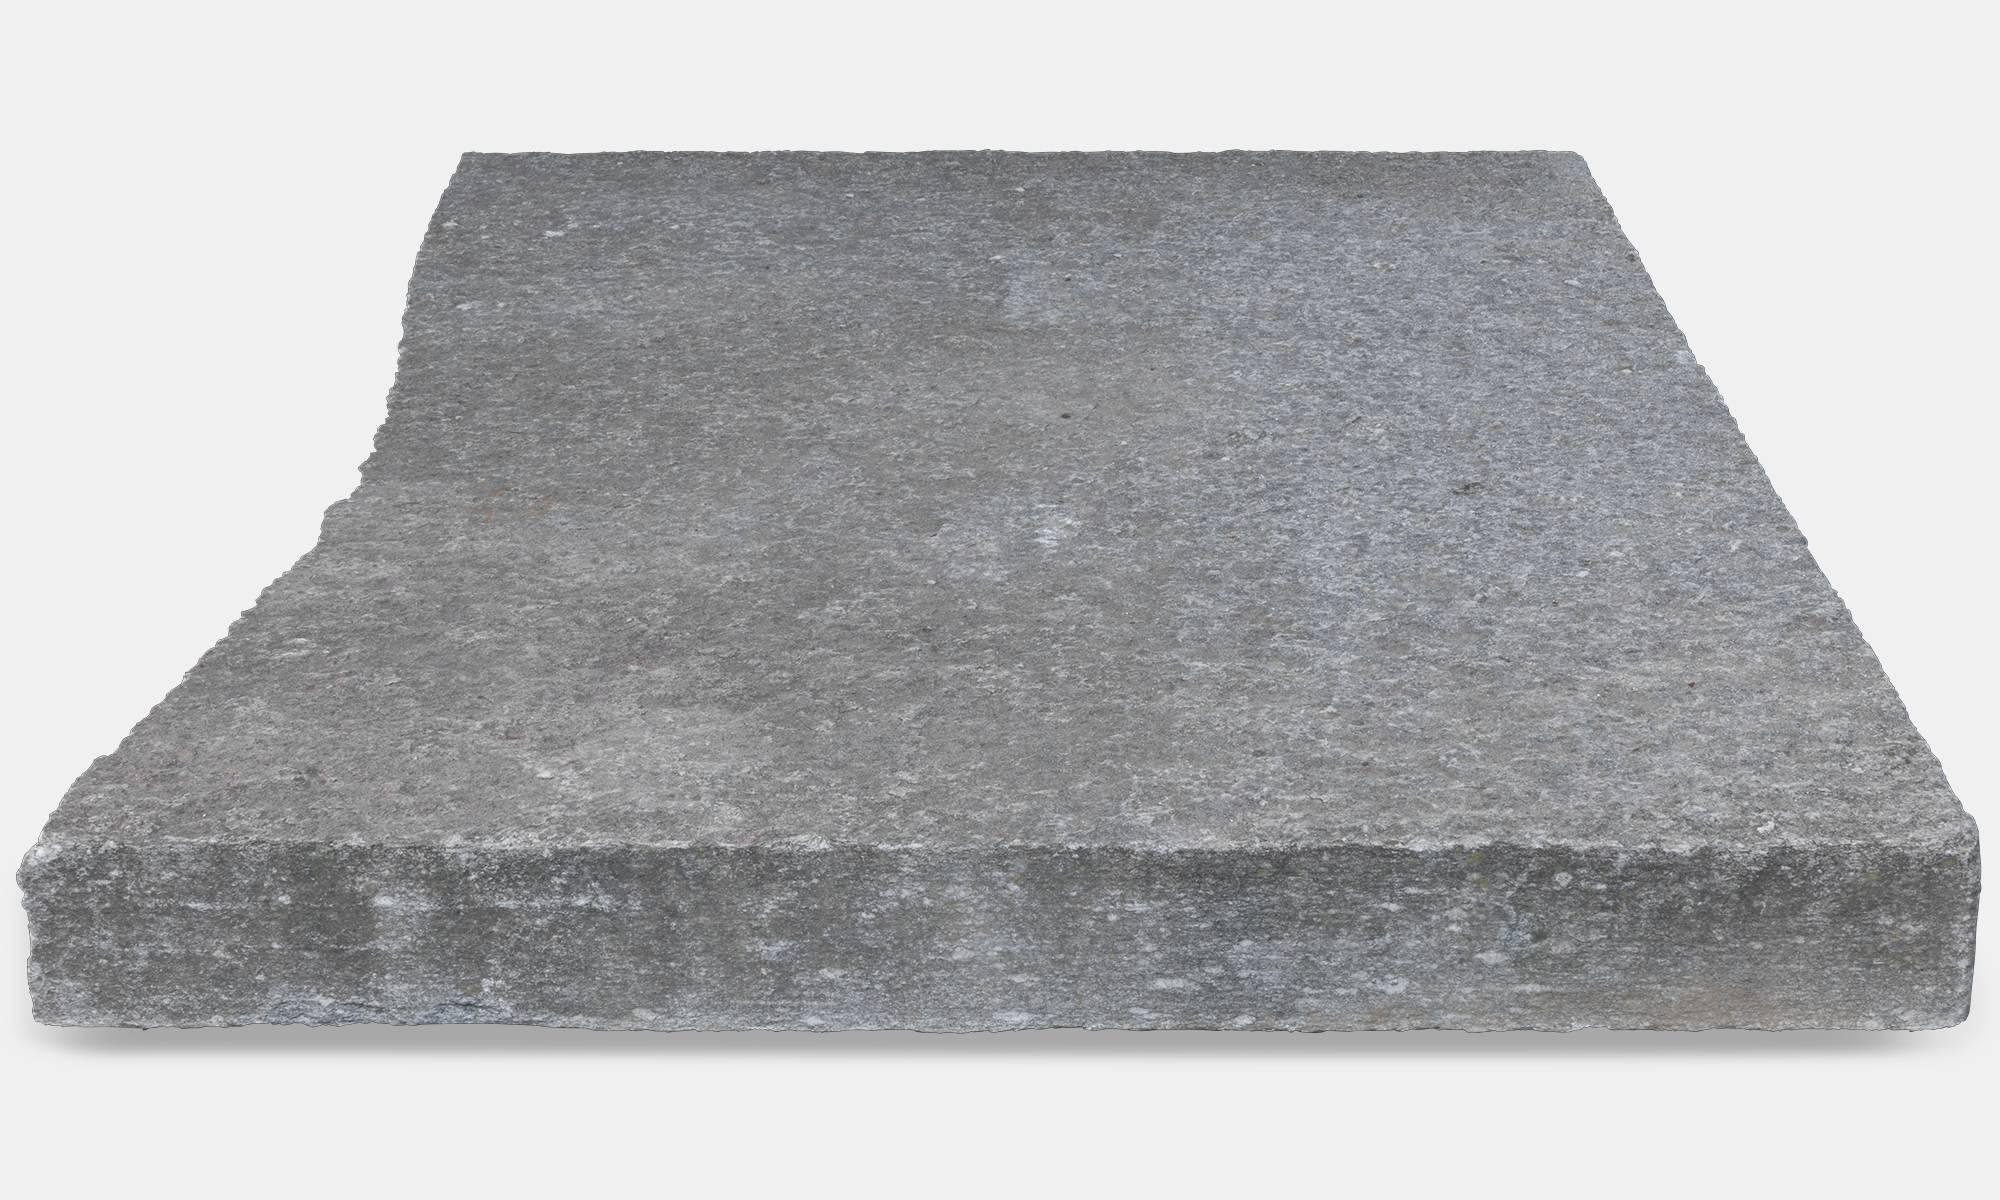 stone slab coffee table